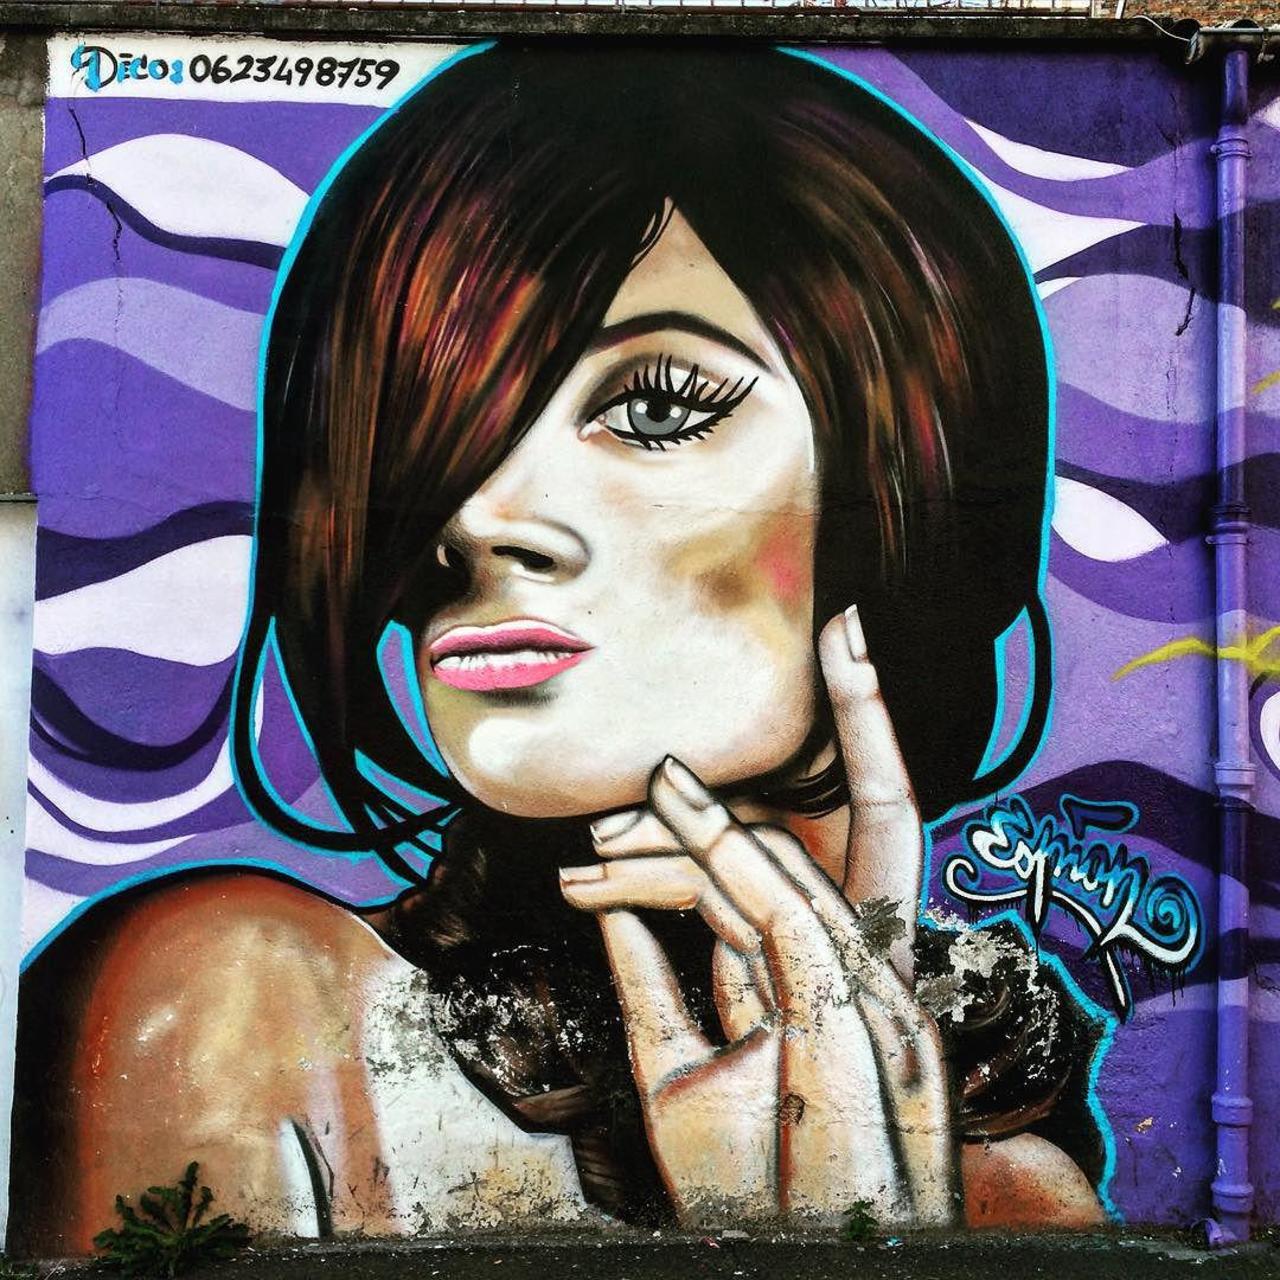 http://ift.tt/1KiqpQt #Paris #graffiti photo by elricoelmagnifico http://ift.tt/1jvYmnA #StreetArt http://t.co/VNFJ0Pn2IG